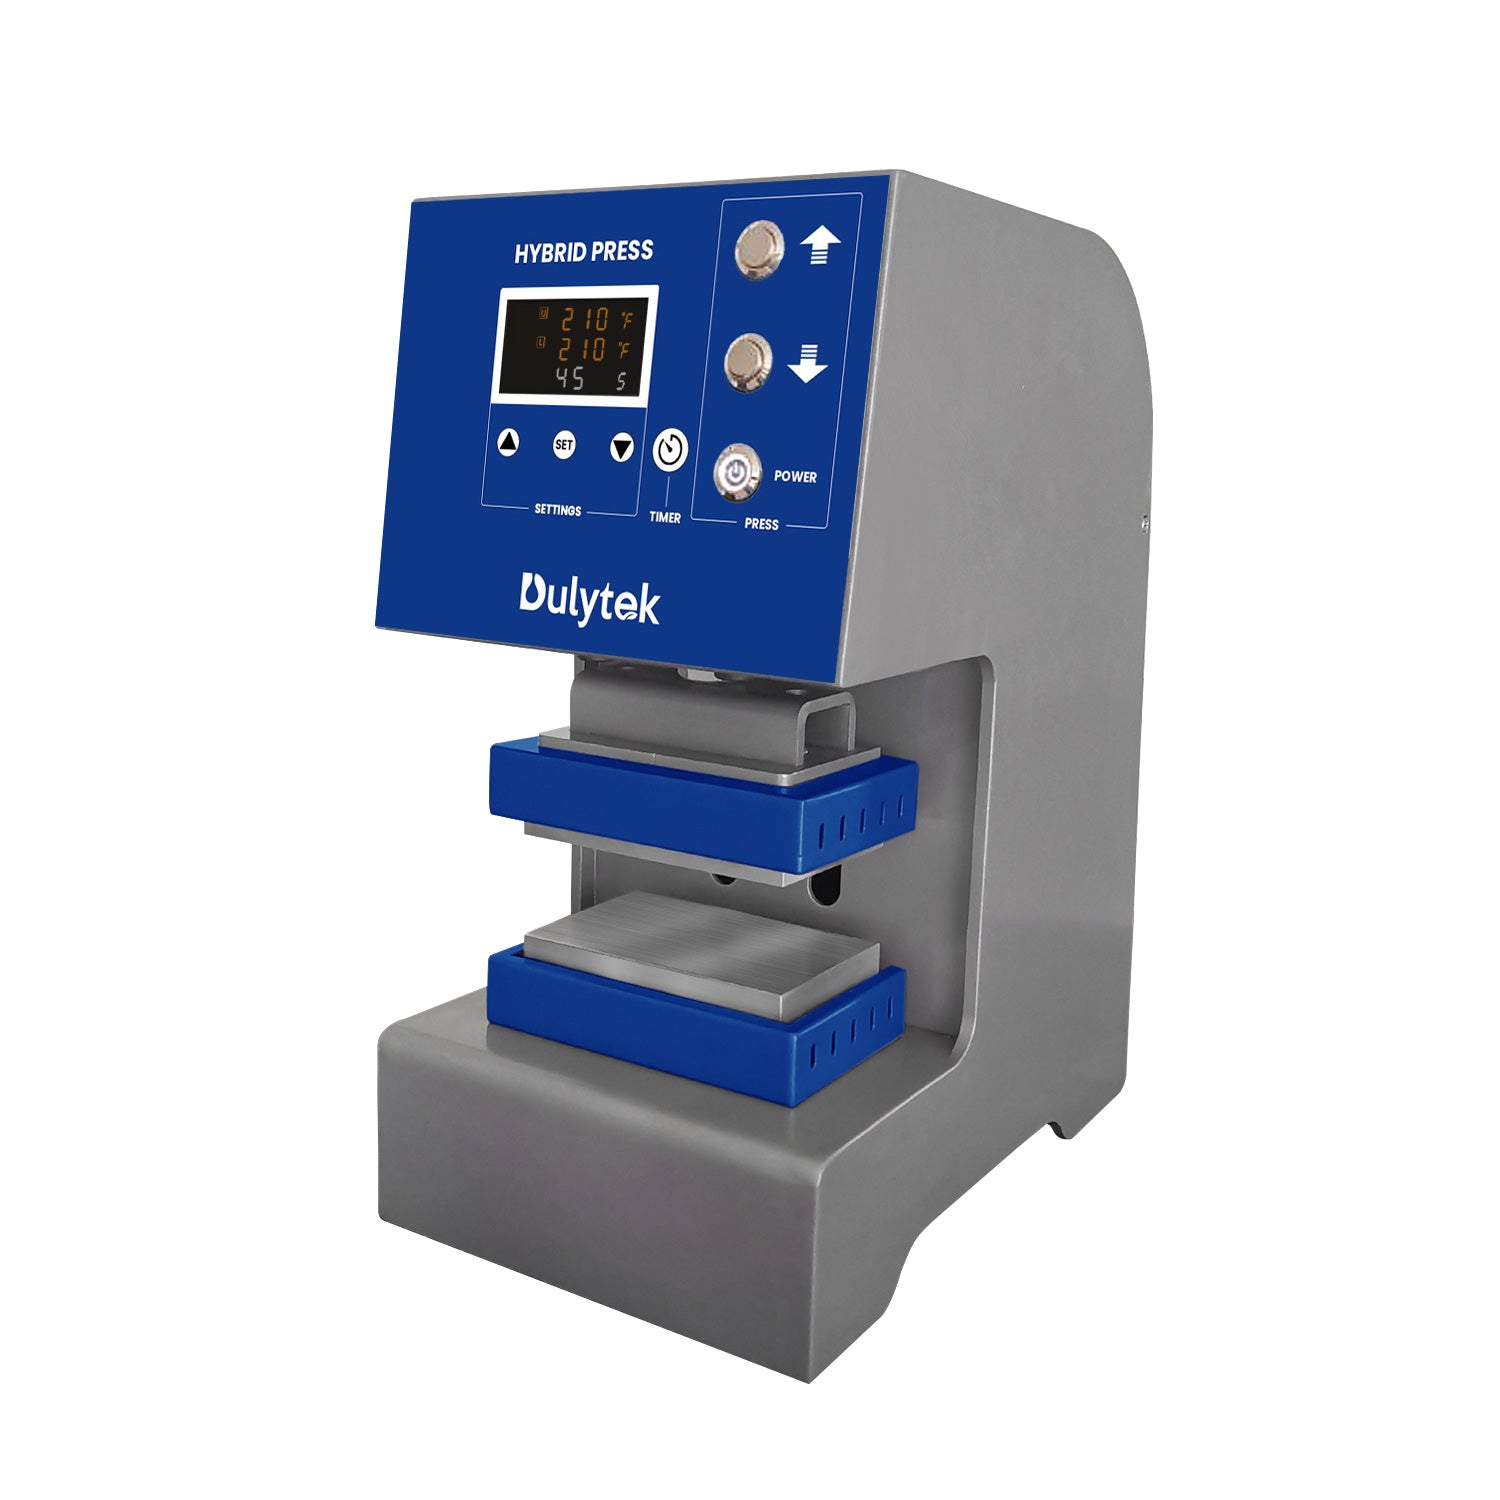 Dulytek DHP5 V5 5 Ton Hydraulic Heat Press with Full Gadget Accessories Set